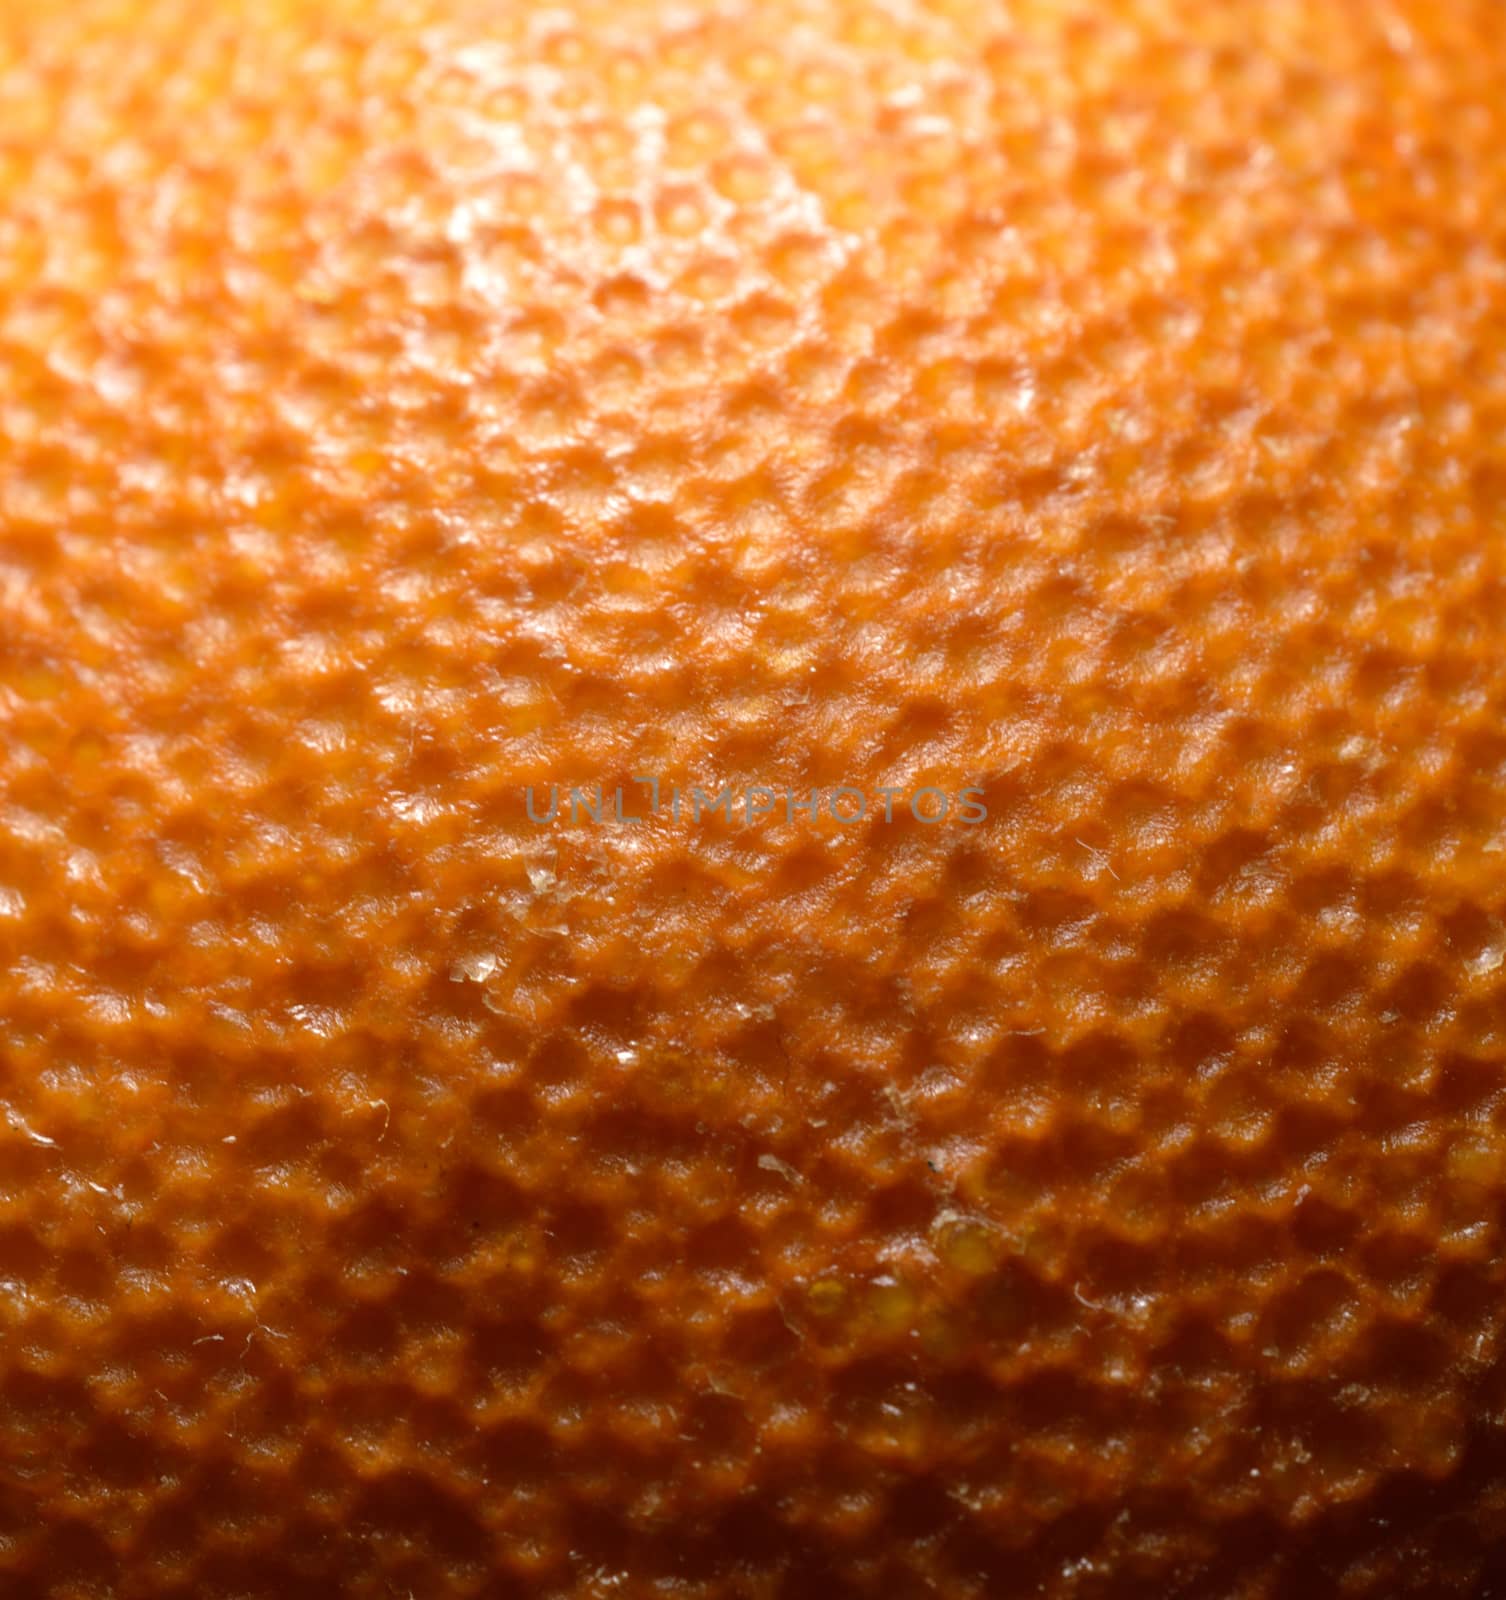 Orange peel by enriscapes